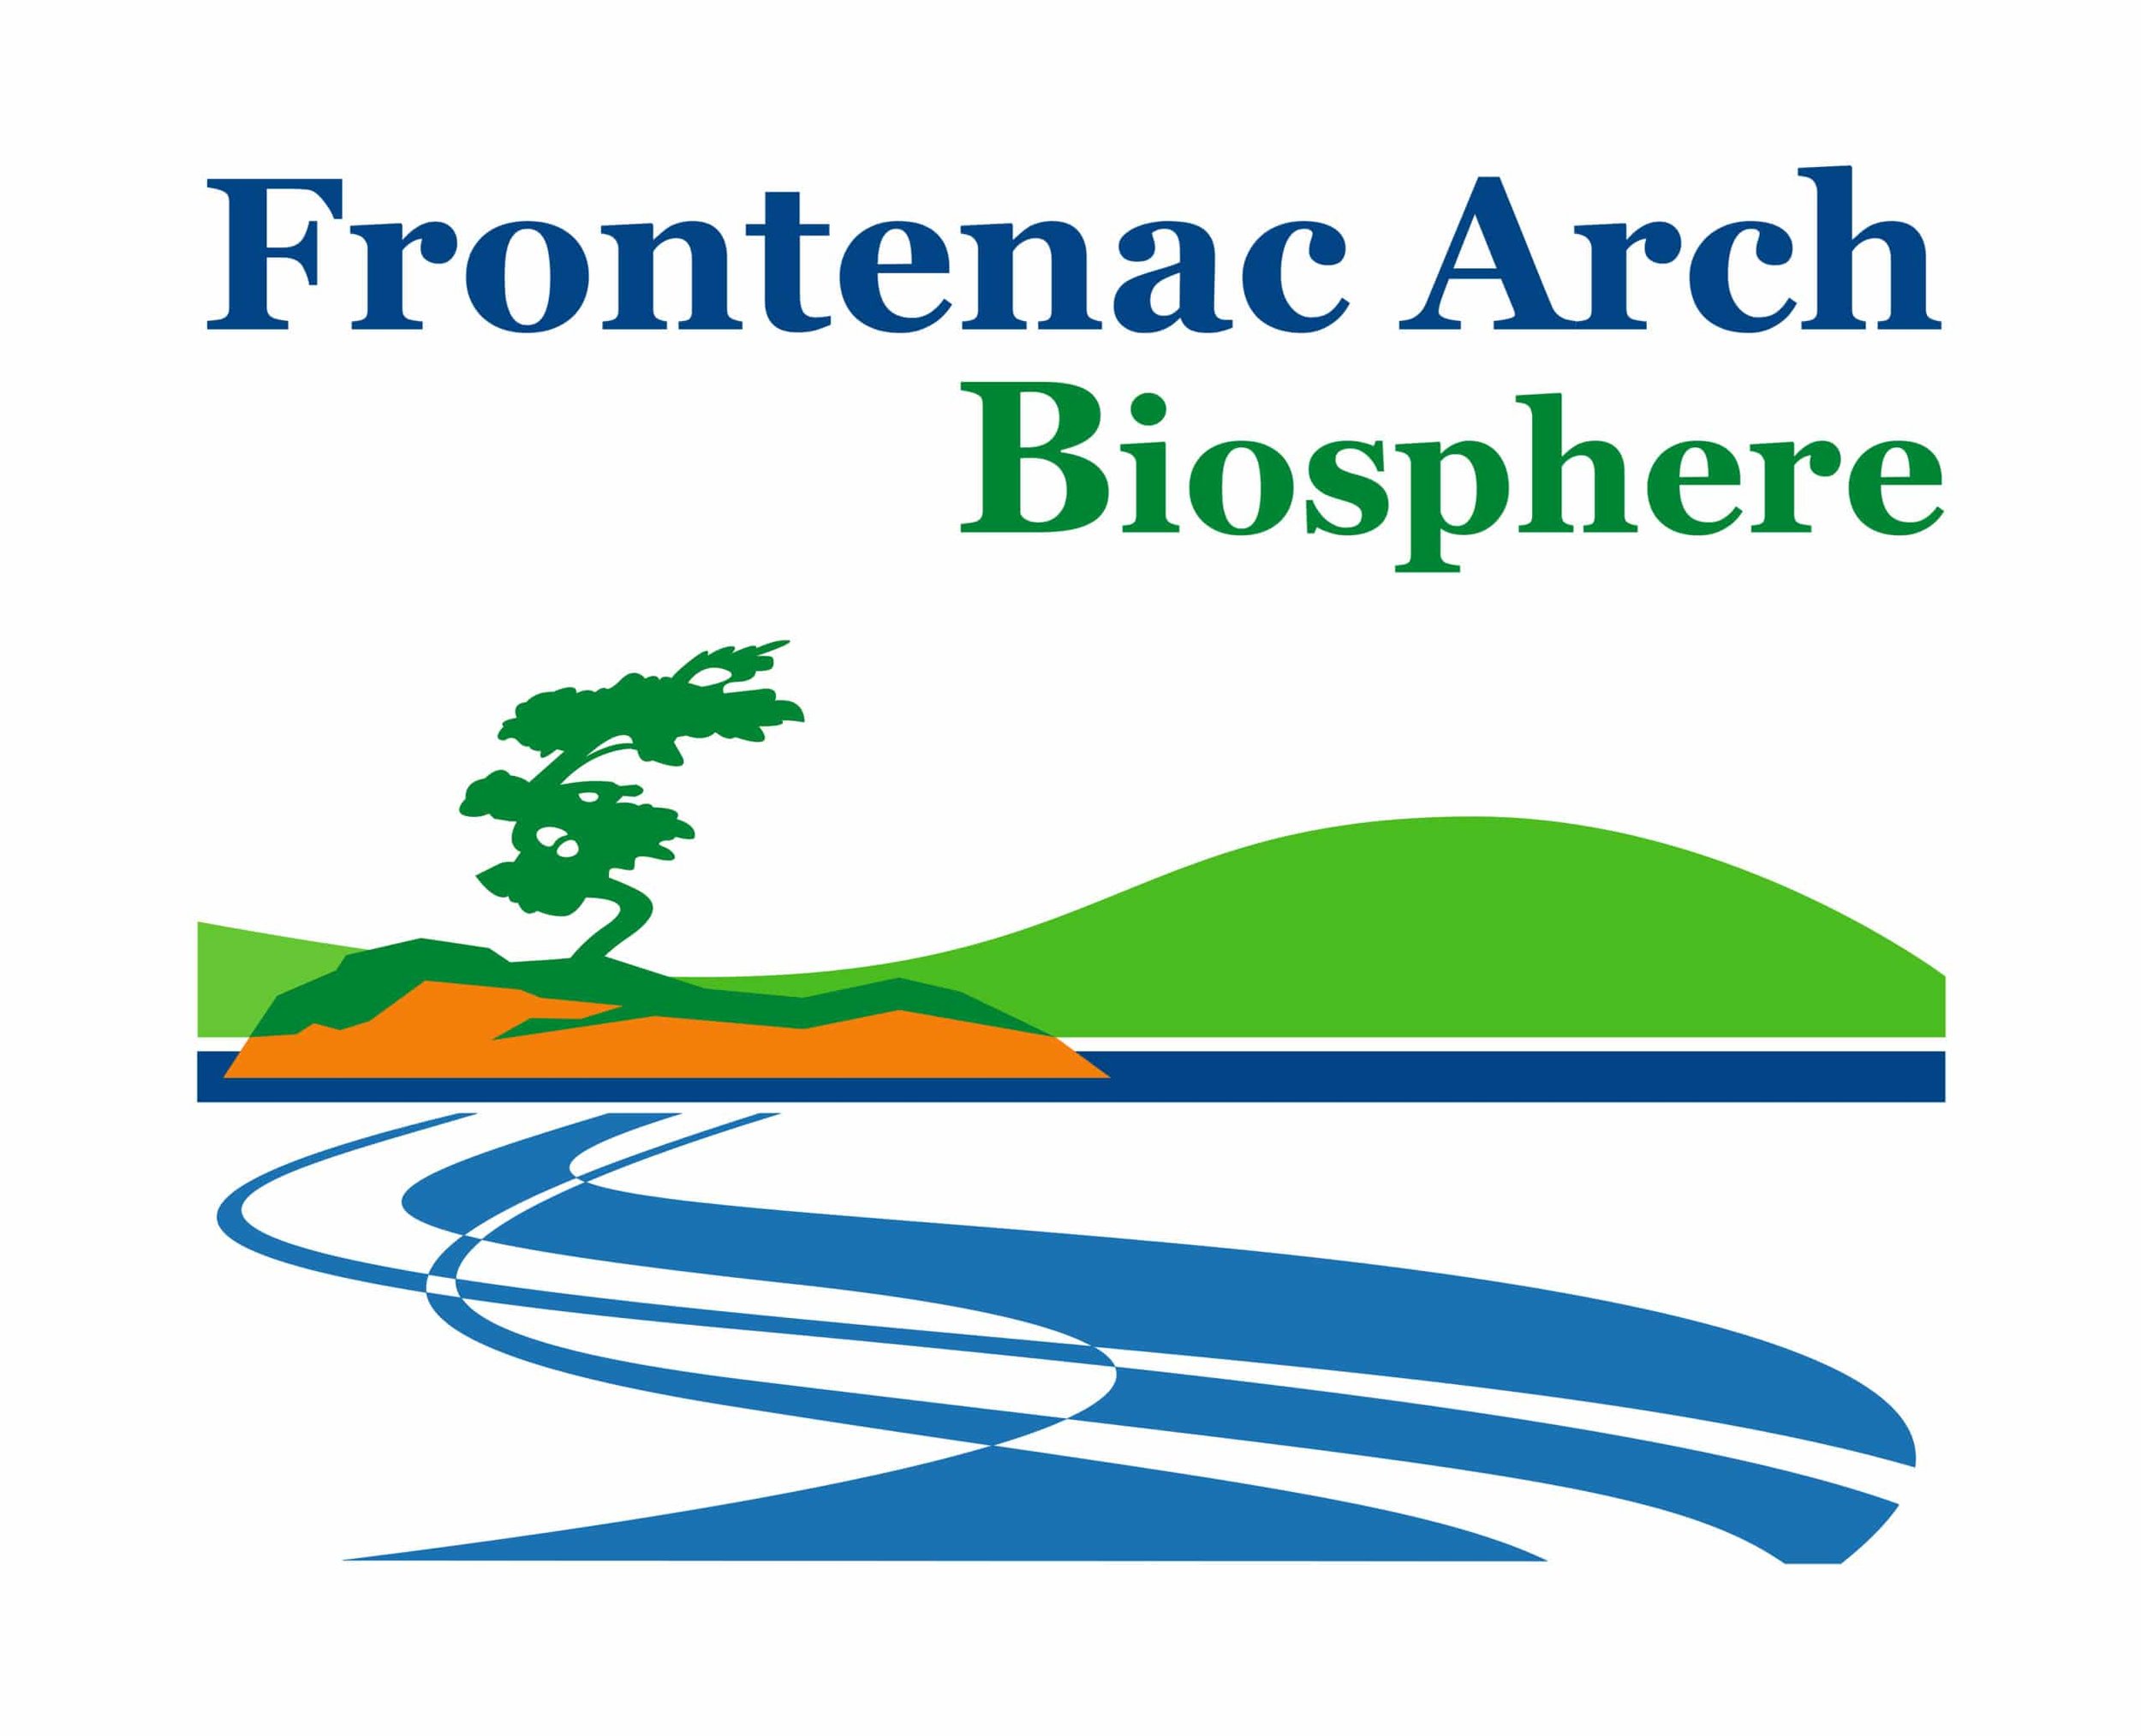 Frontenac Arch Biosphere